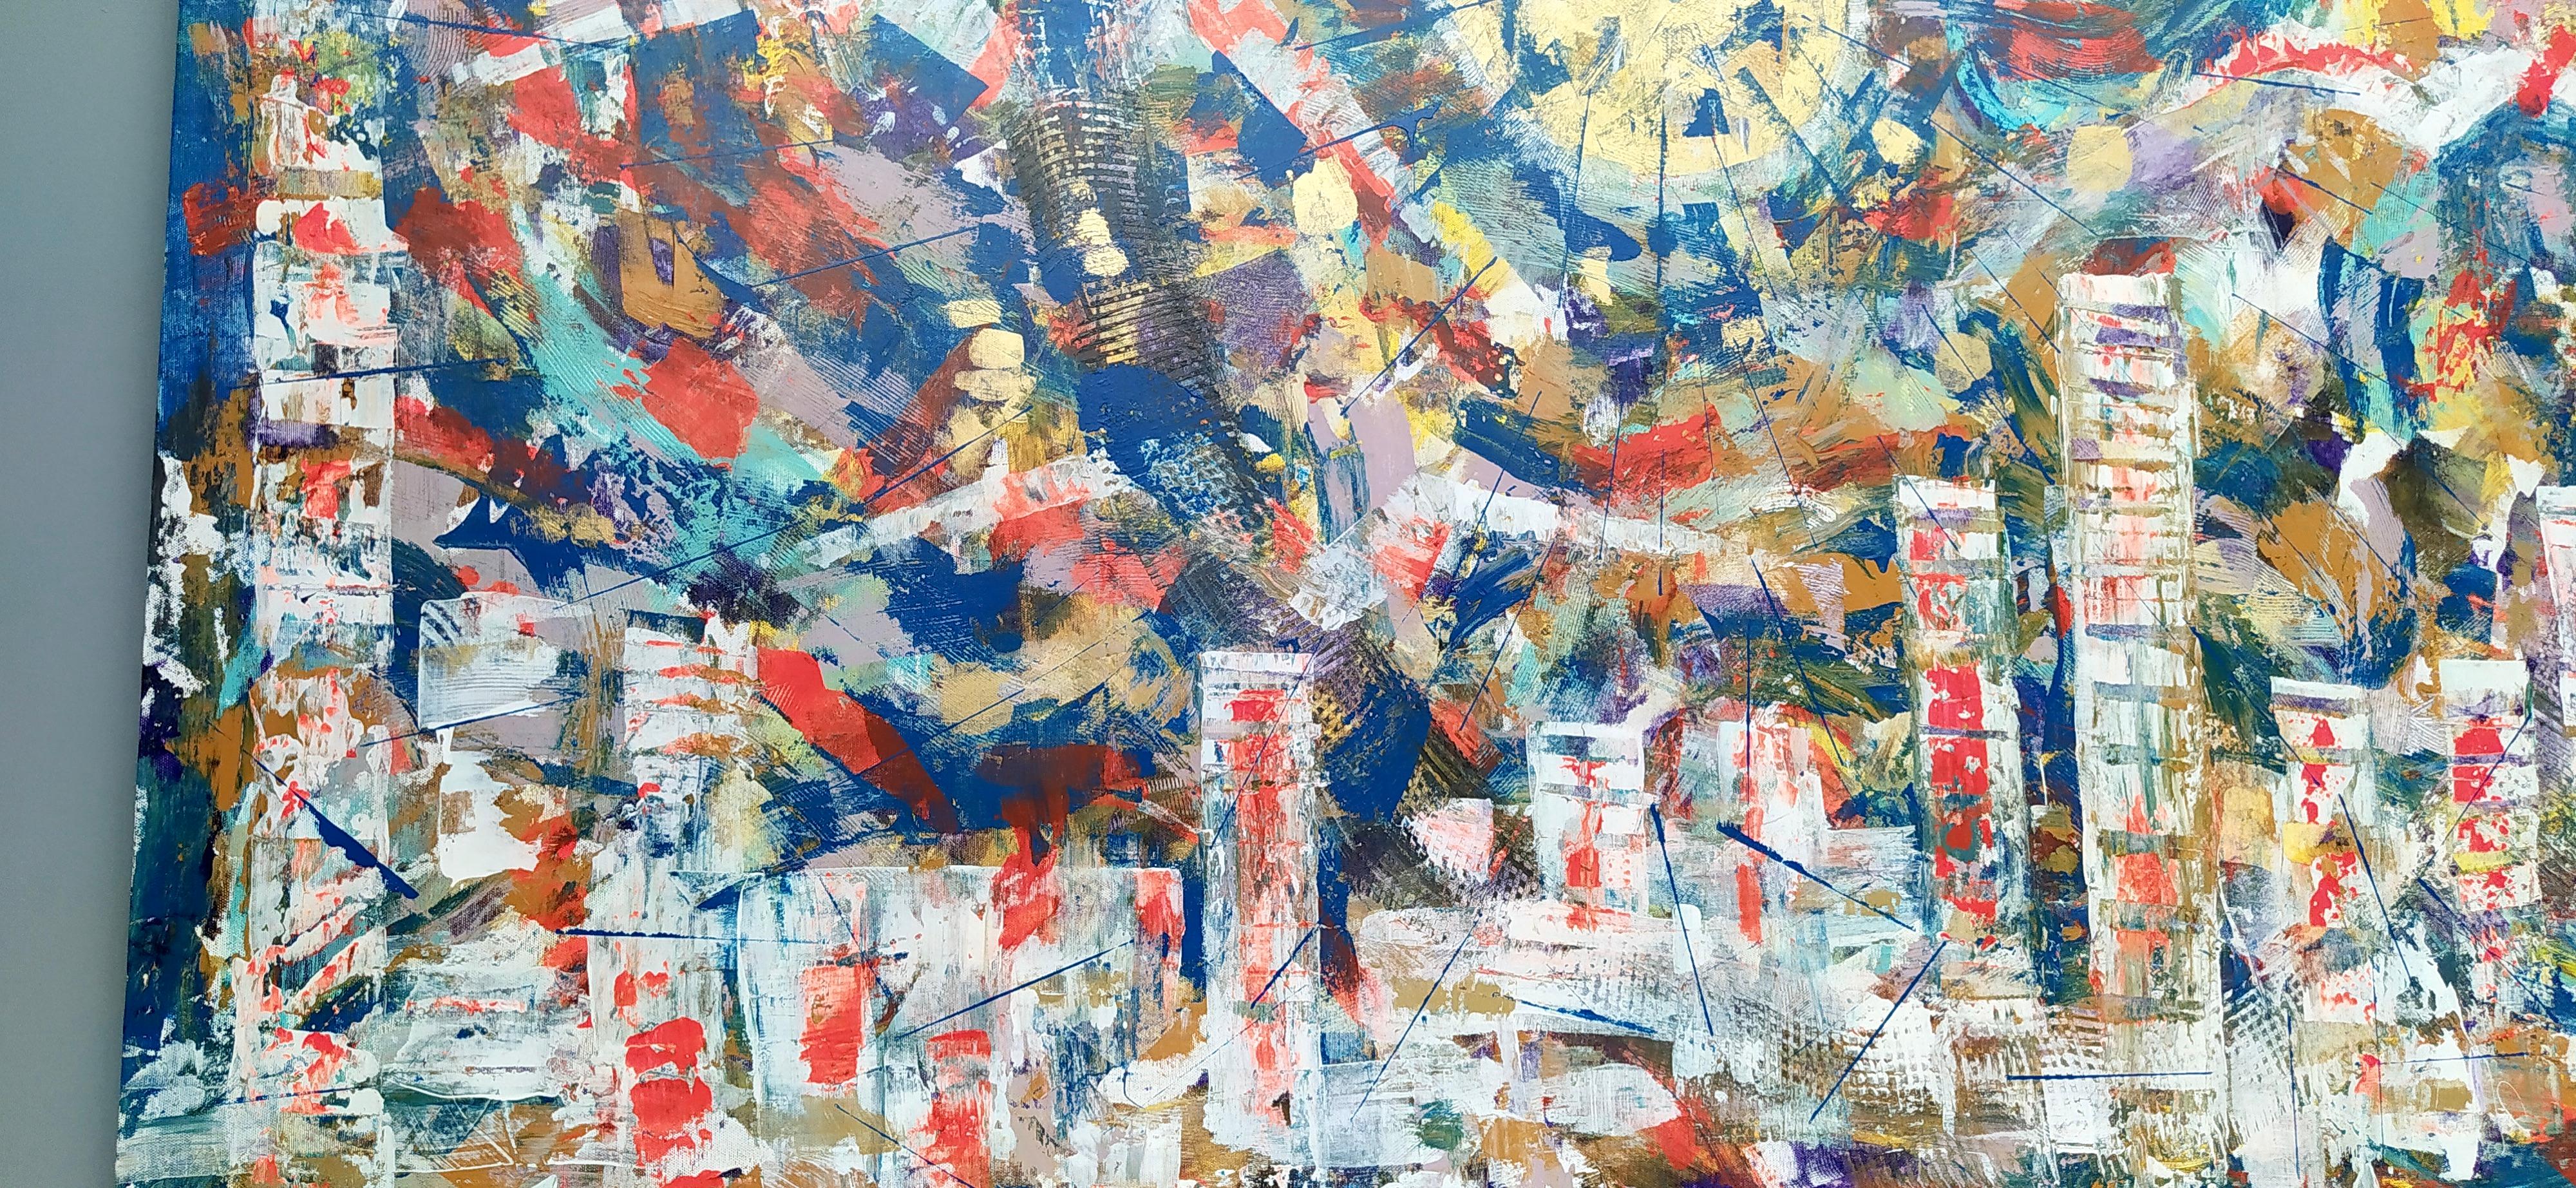 « Paintaggio urbano » d'Enzio Wenk, 2020, acrylique sur toile, néo-expressionnisme  en vente 5